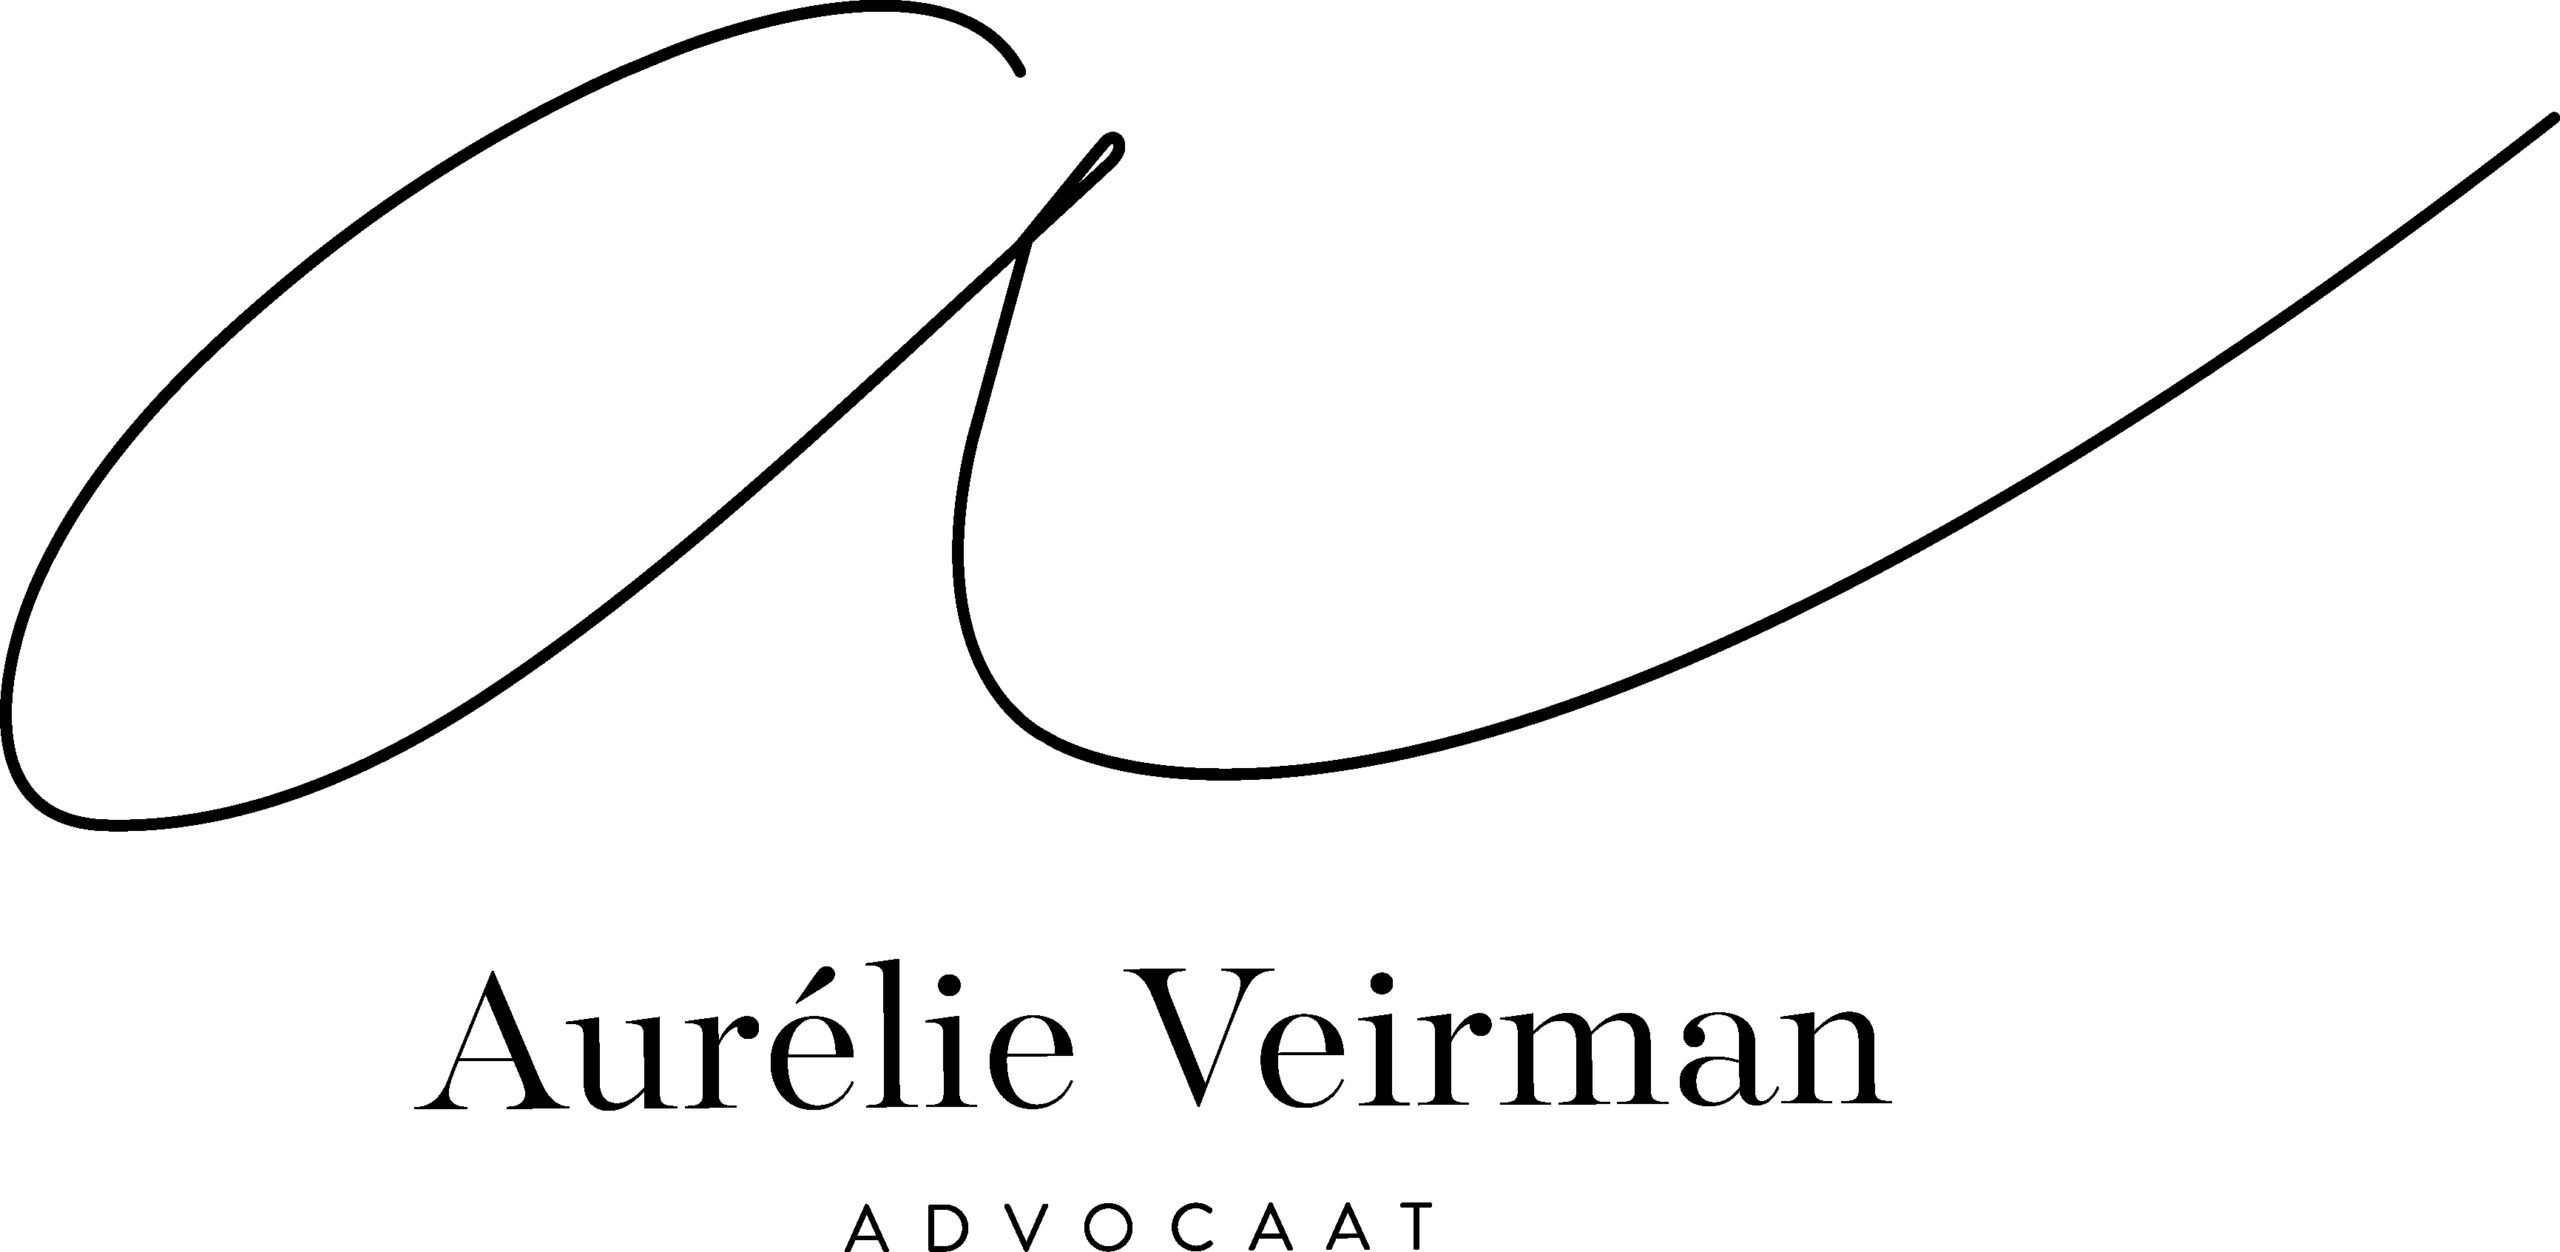 Logo Veirman Aurélie Veirman